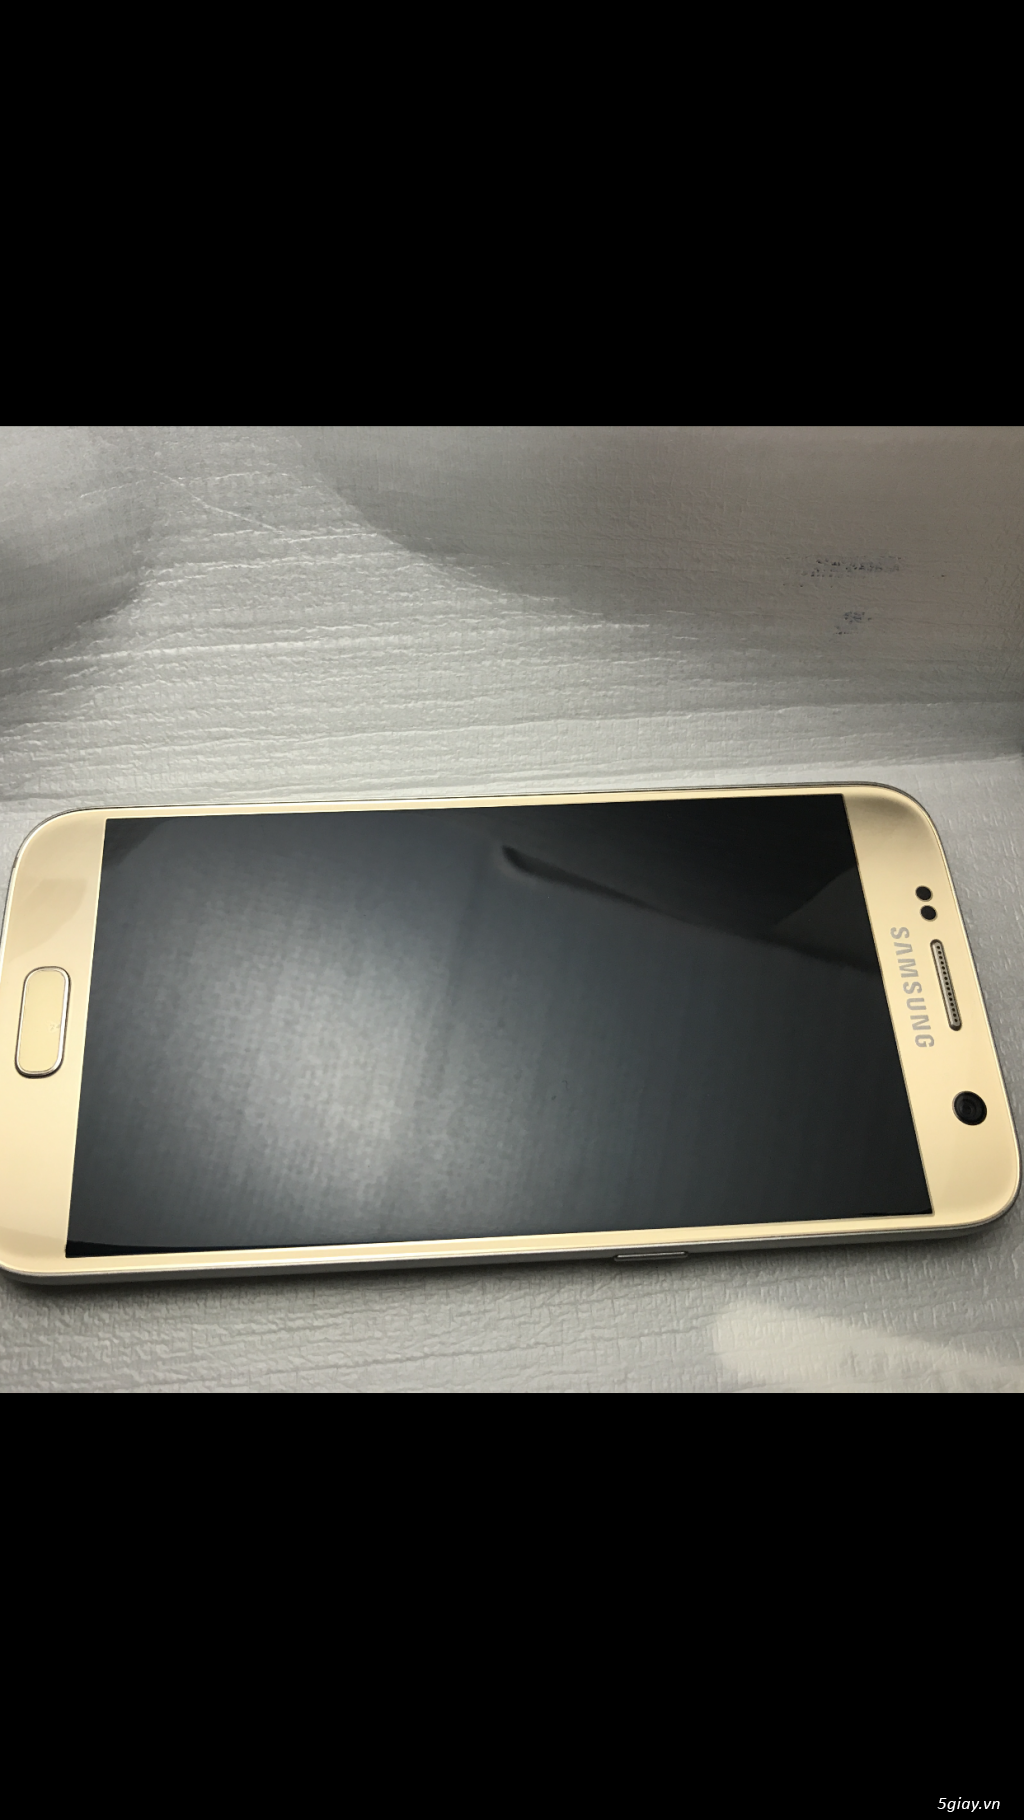 Bán Samsung S7, Gold, 2 sim, full box - 4